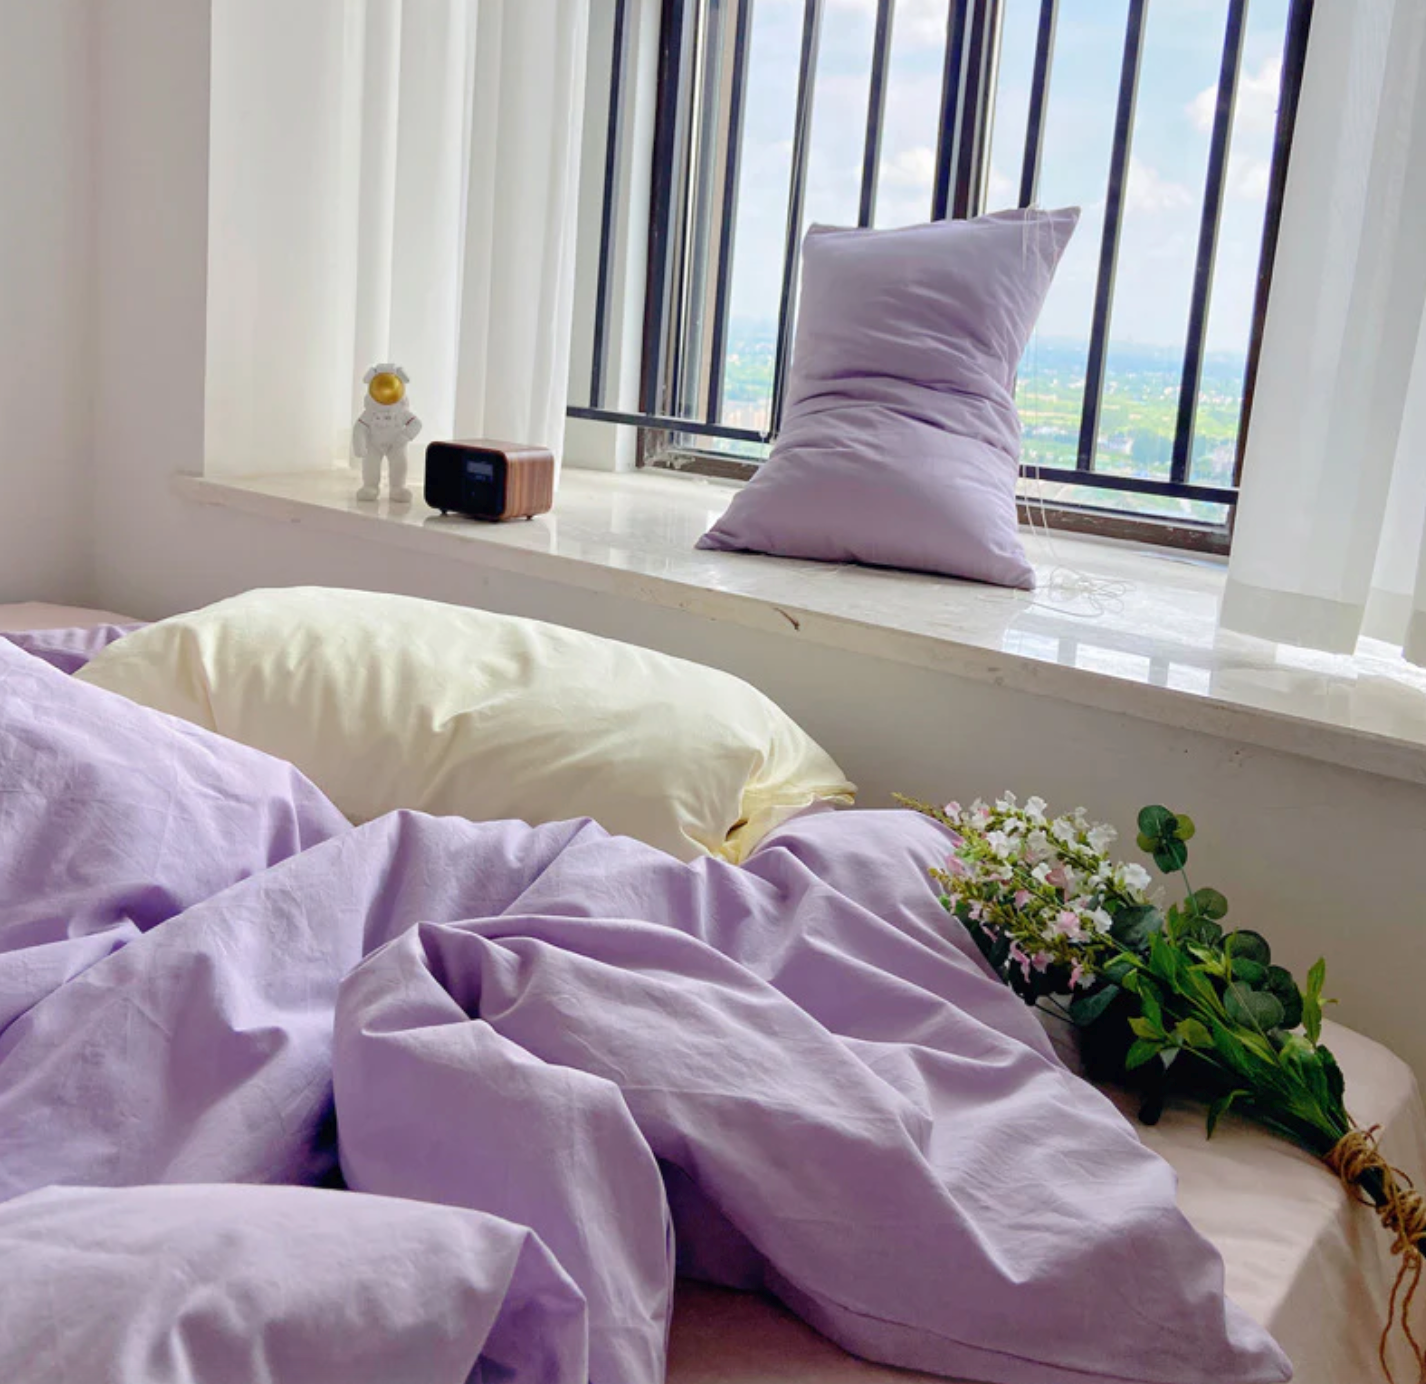 Ulap Bedsheet USA Lavender triple mix and match family bedsheet set pillow on window duvet bedroom window view